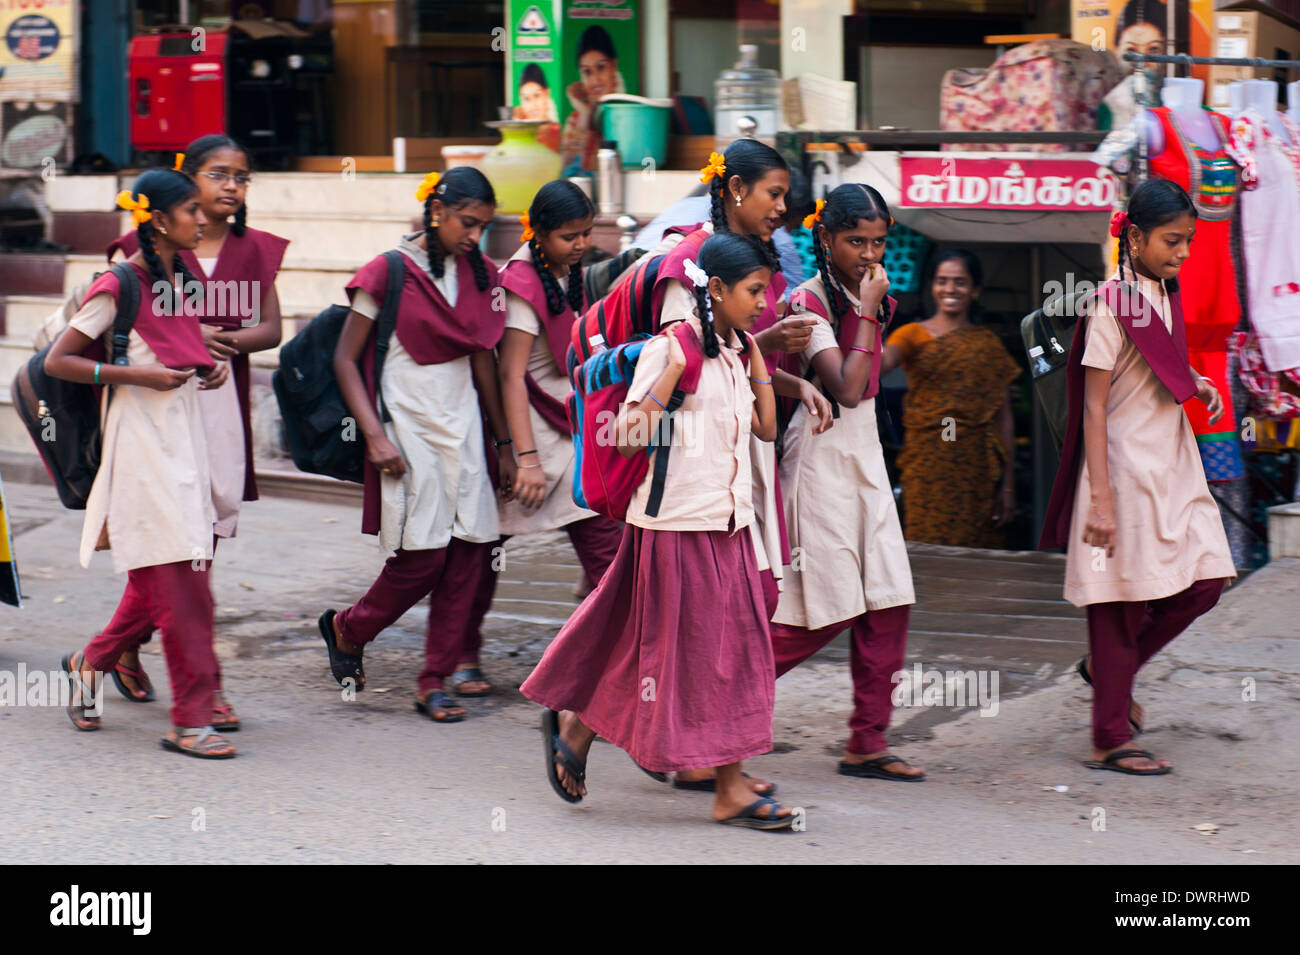 South Southern India Tamil Nadu Madurai street scene young schoolchildren schoolgirls school girls in uniform walking Stock Photo